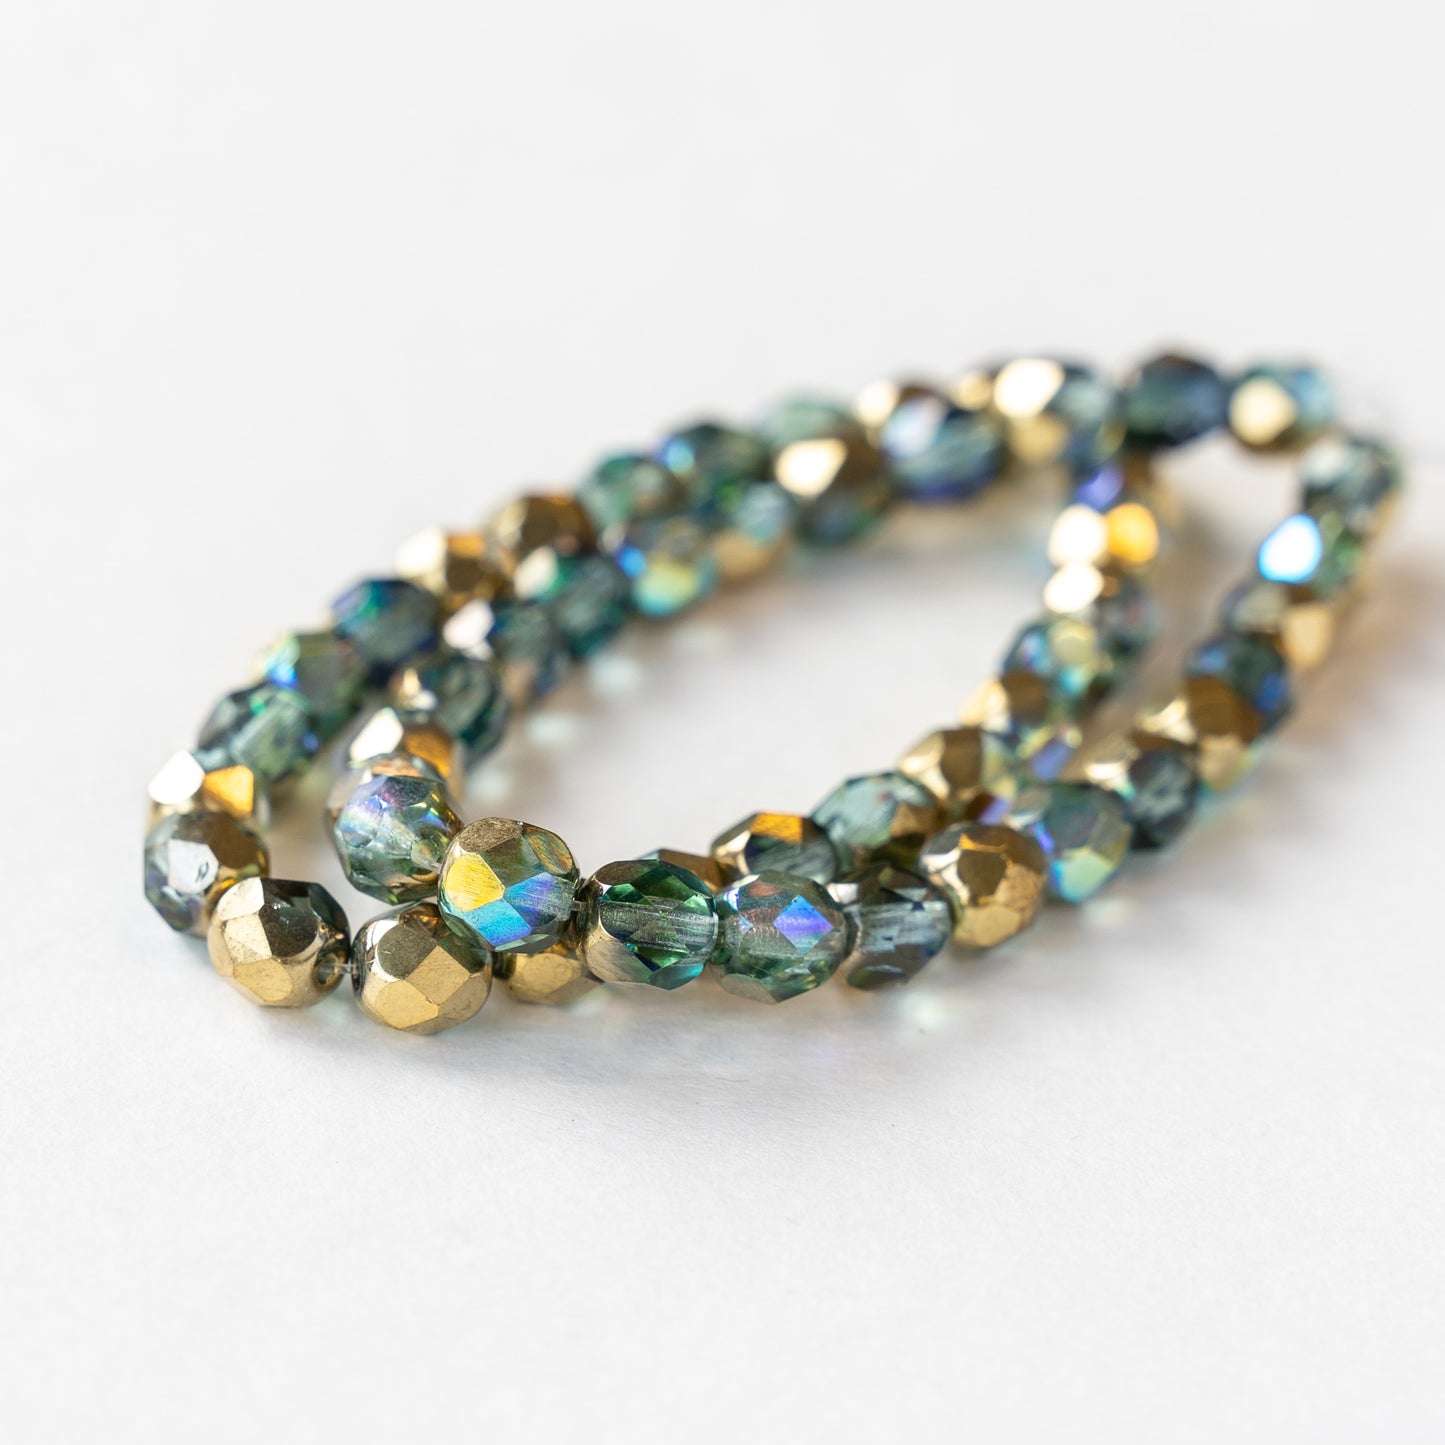 6mm Round Firepolished Beads - Light Aqua Gold - 25 beads